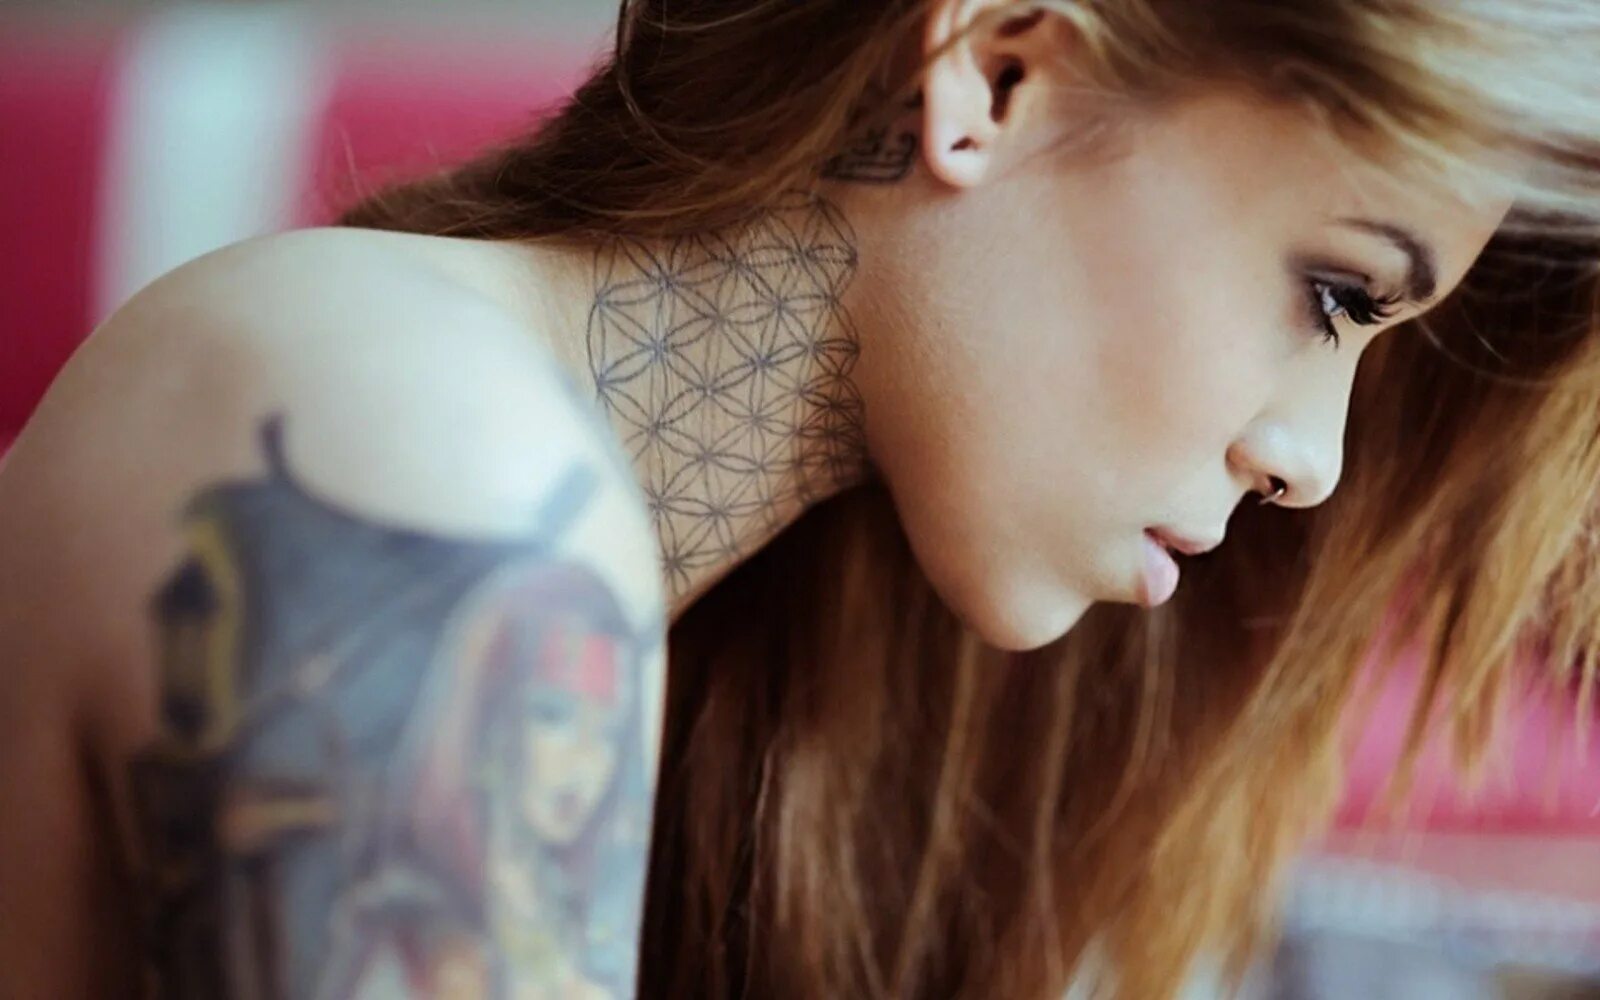 Arabella Drummond. Arabella Drummond Татуировки. Красивые Татуировки для девушек. Самые красивые тату для девушек.